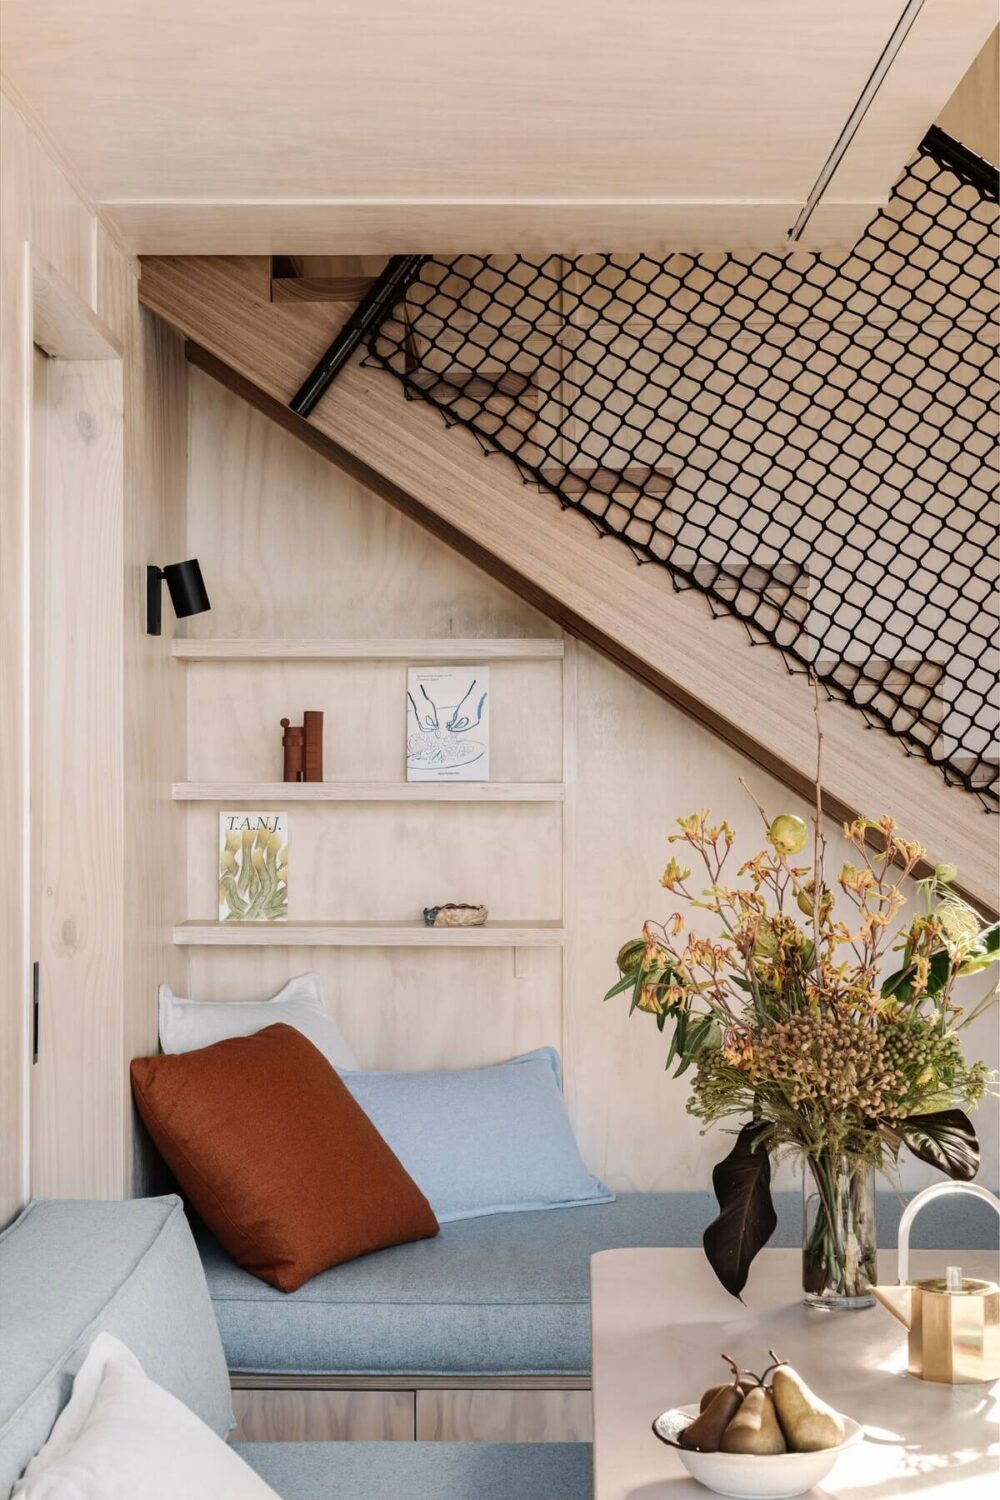 sofa-shelves-small-home-airbnb-australia-nordroom